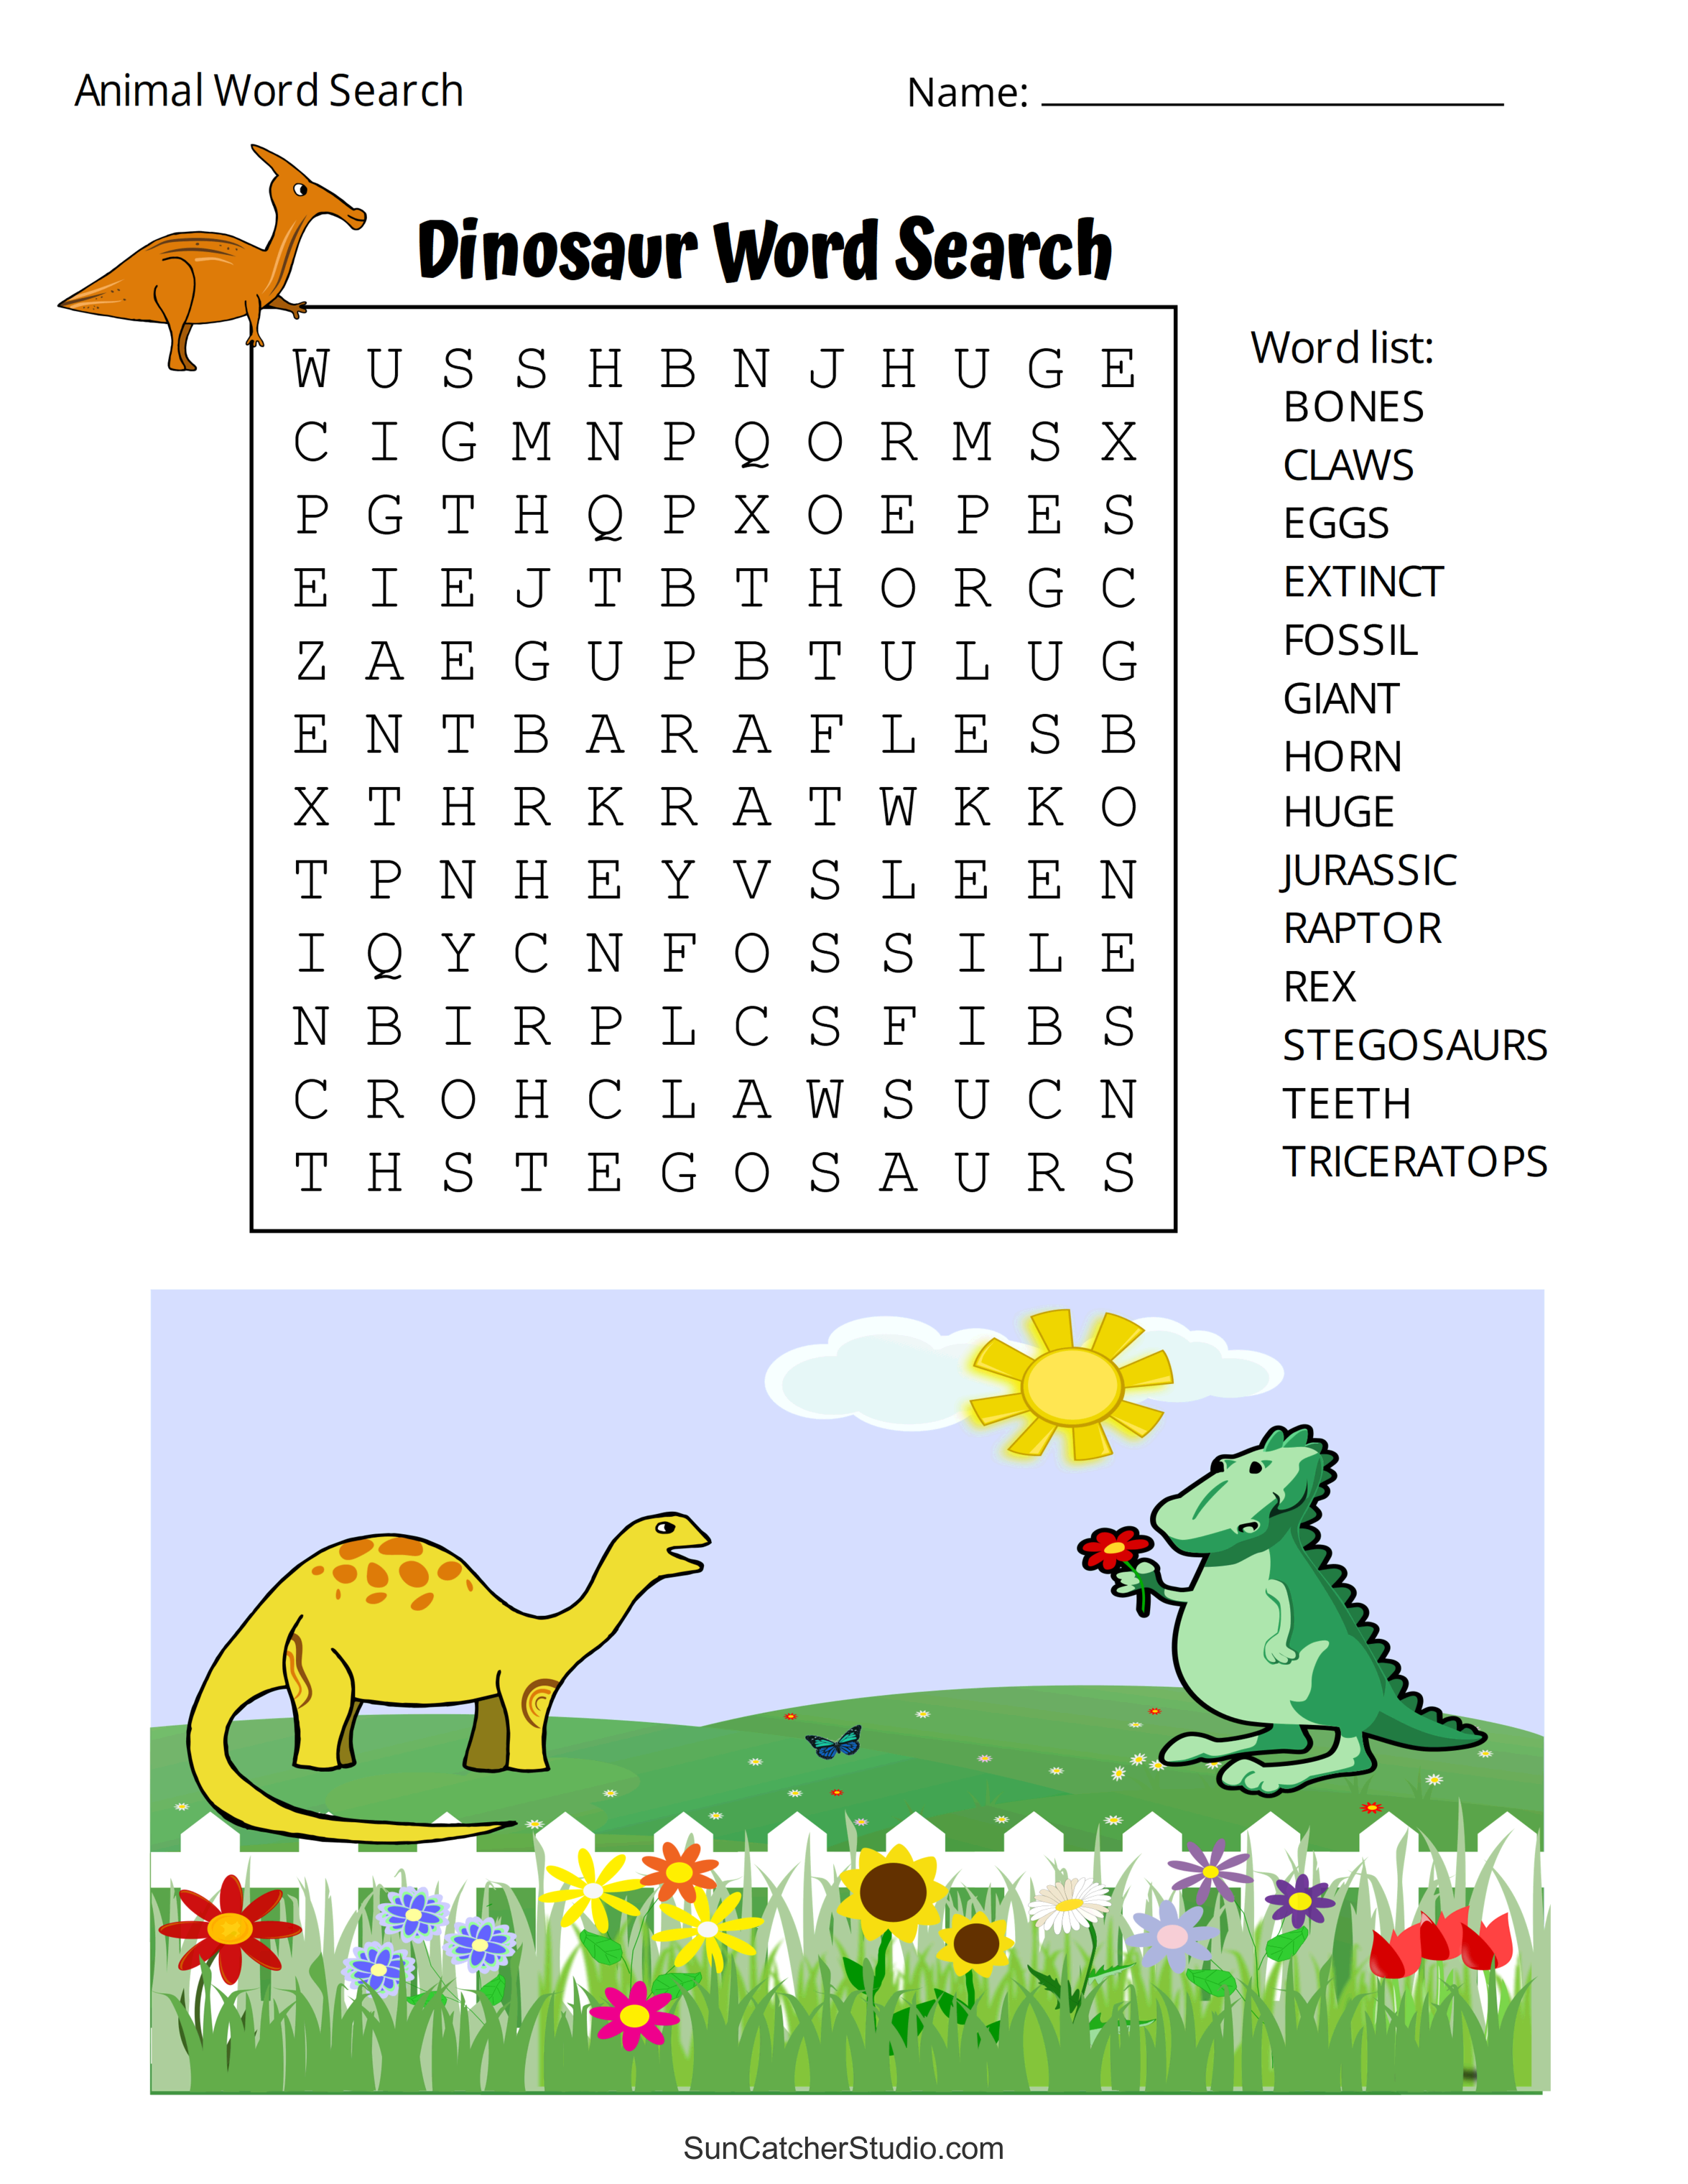 animal-word-search-free-printable-dog-pet-dinosaur-puzzles-diy